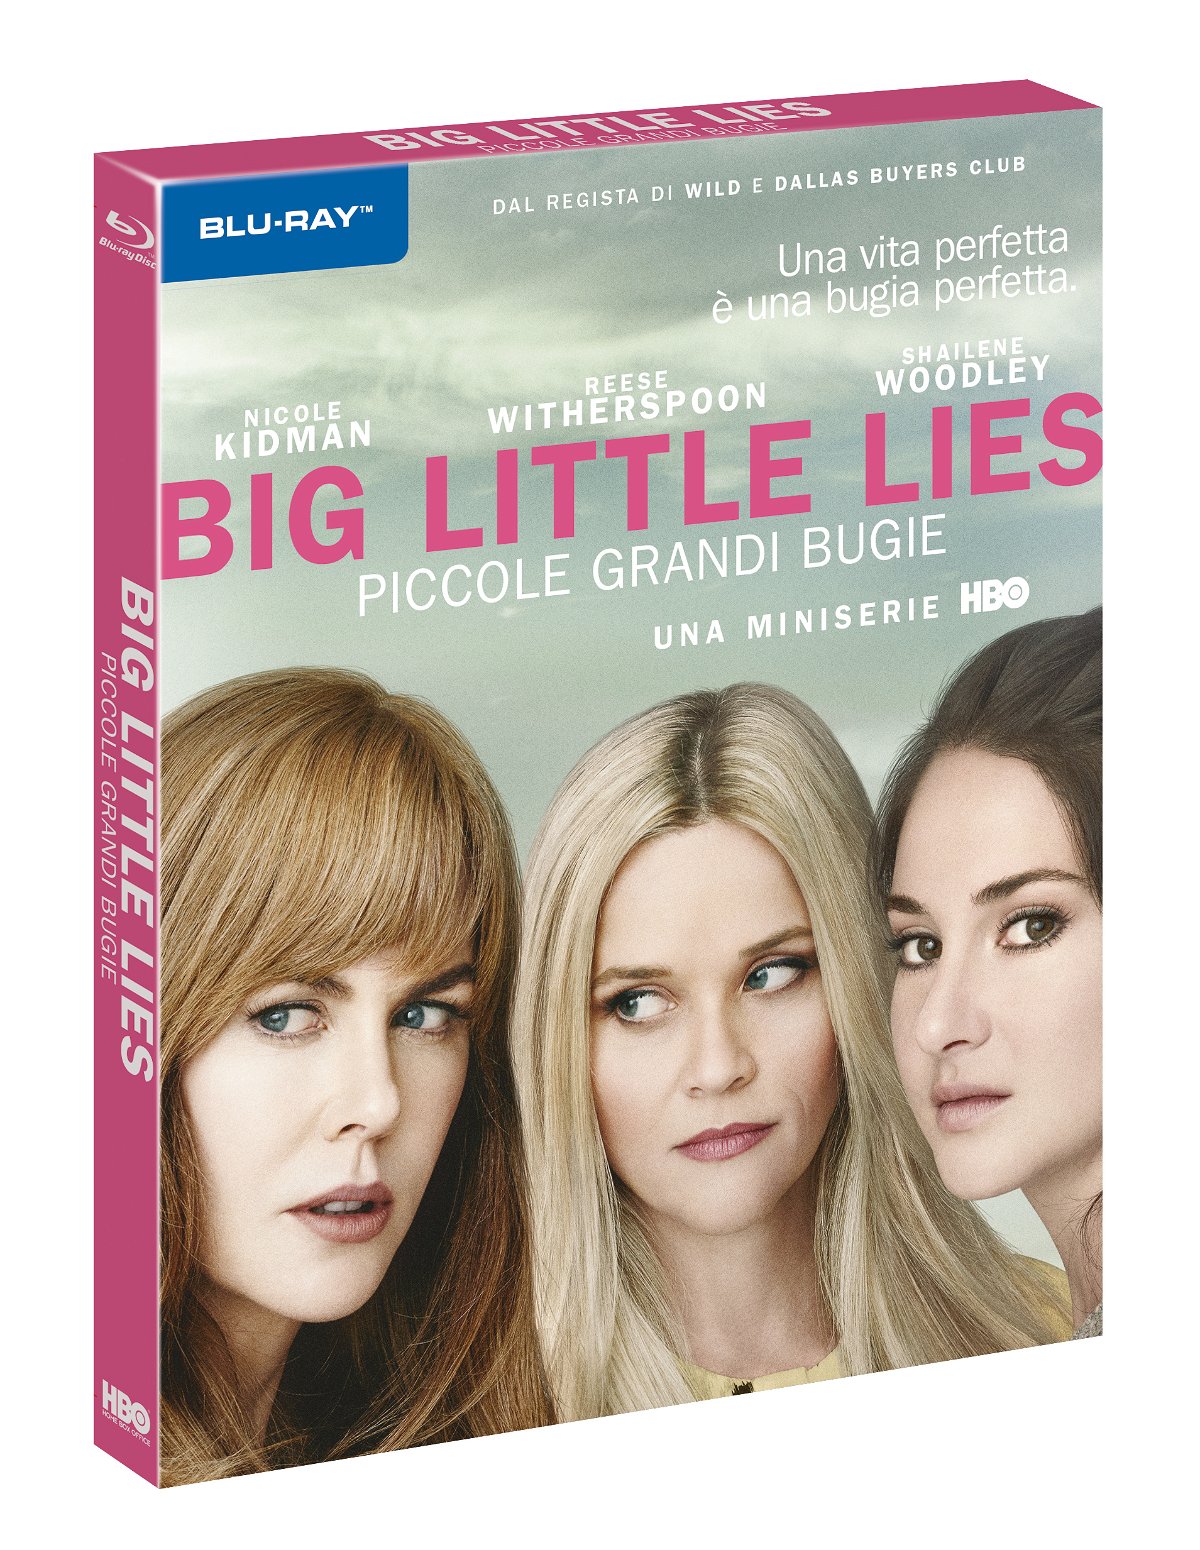 Big Little Lies - Piccole Grandi Bugie Blu-ray